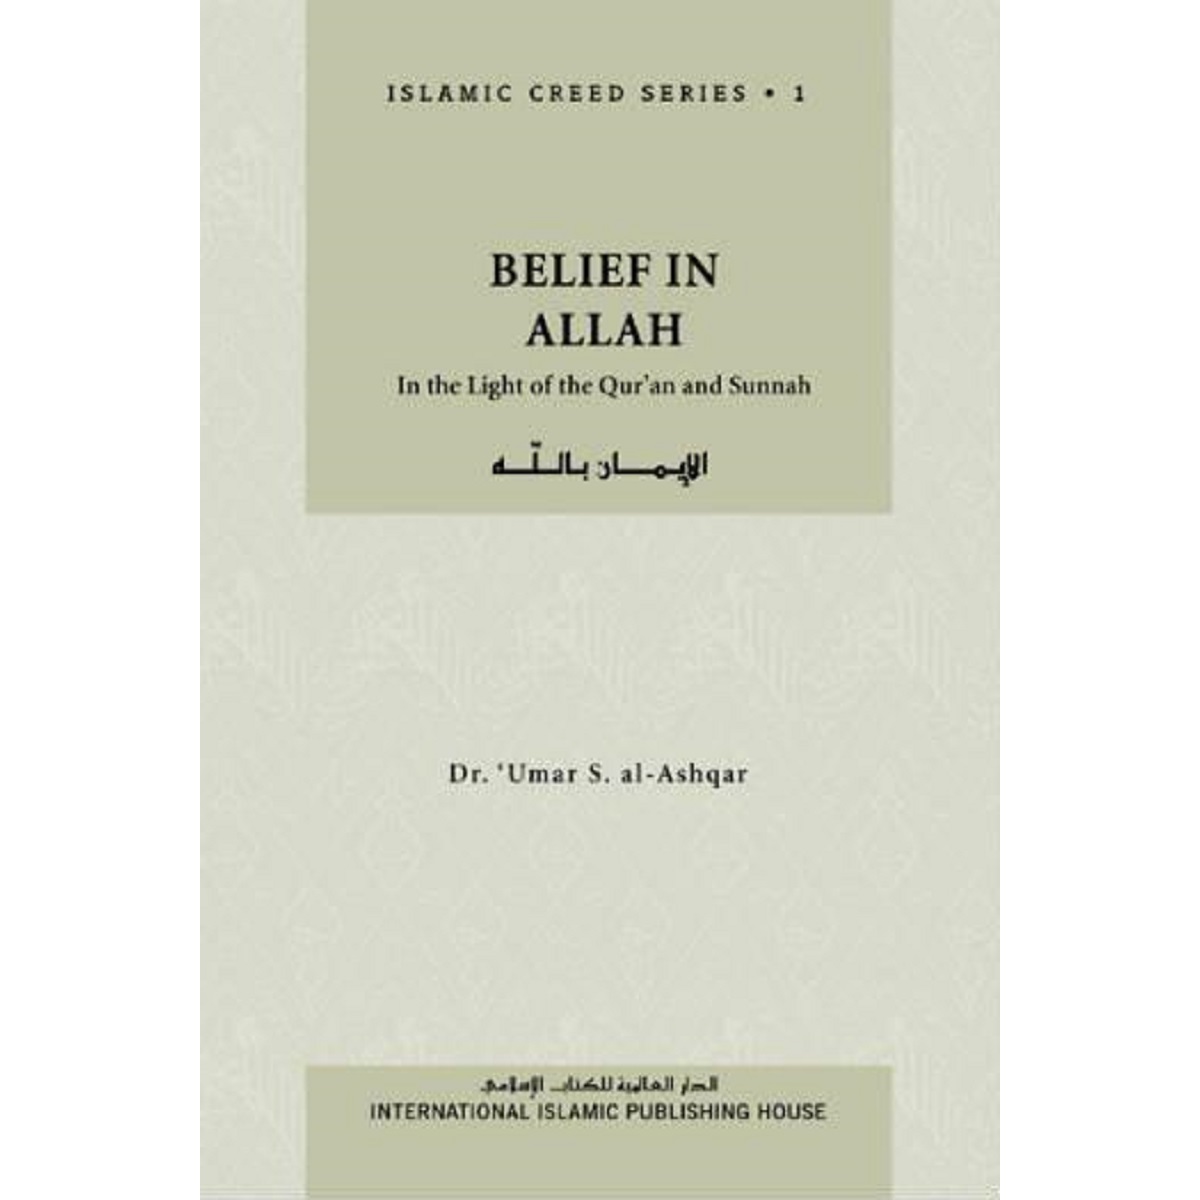 https://tarbiyahbooksplus.com/shop/hadith-and-sunnah/belief-in-allah/